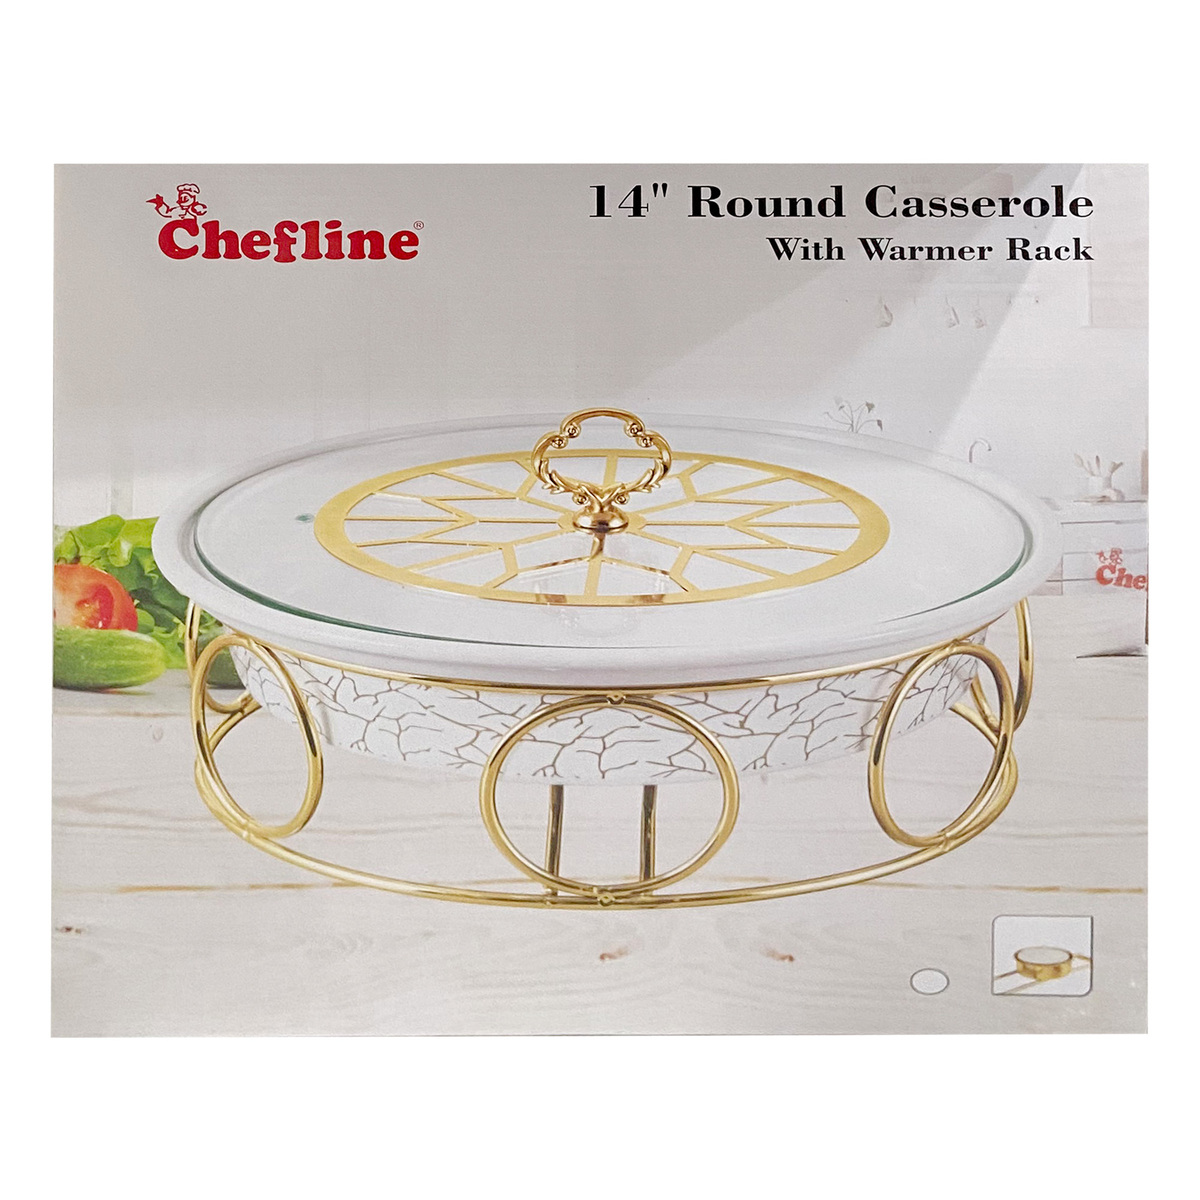 Chefline Round Casserole with Warmer Rack, 14 inches, 3177